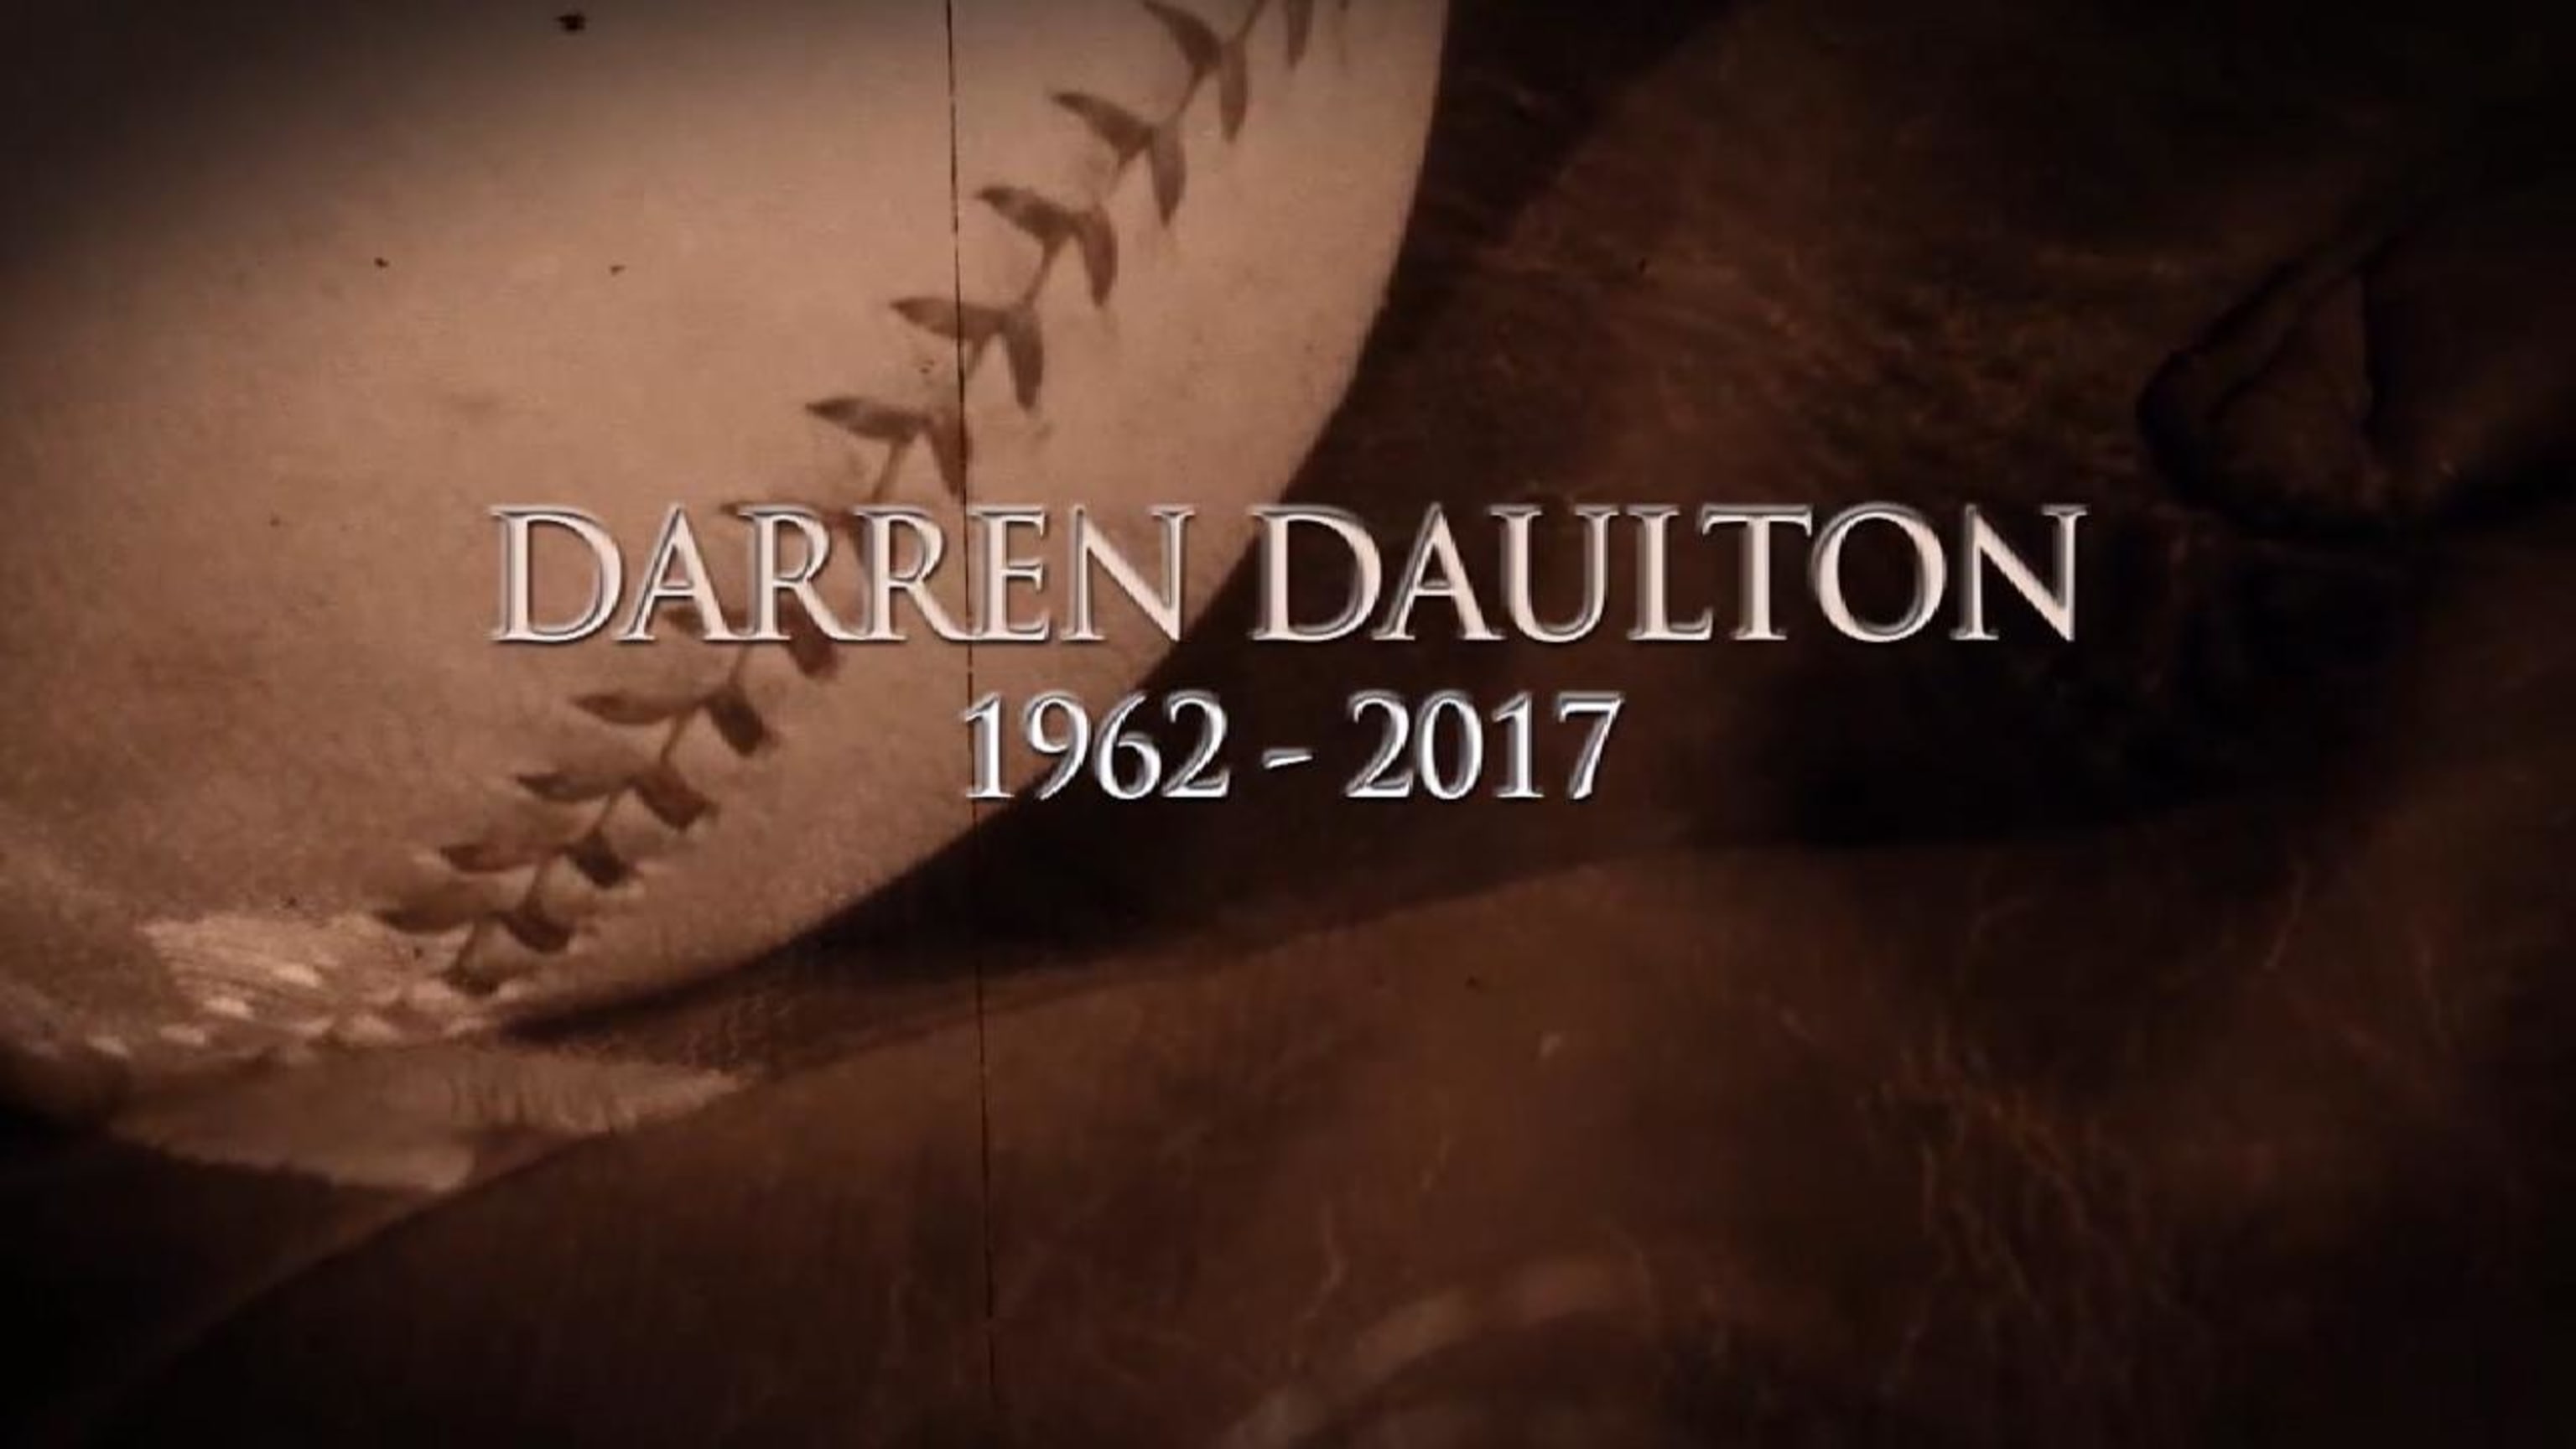 Darren Daulton, member of Marlins 1997 World Series team, dies at 55